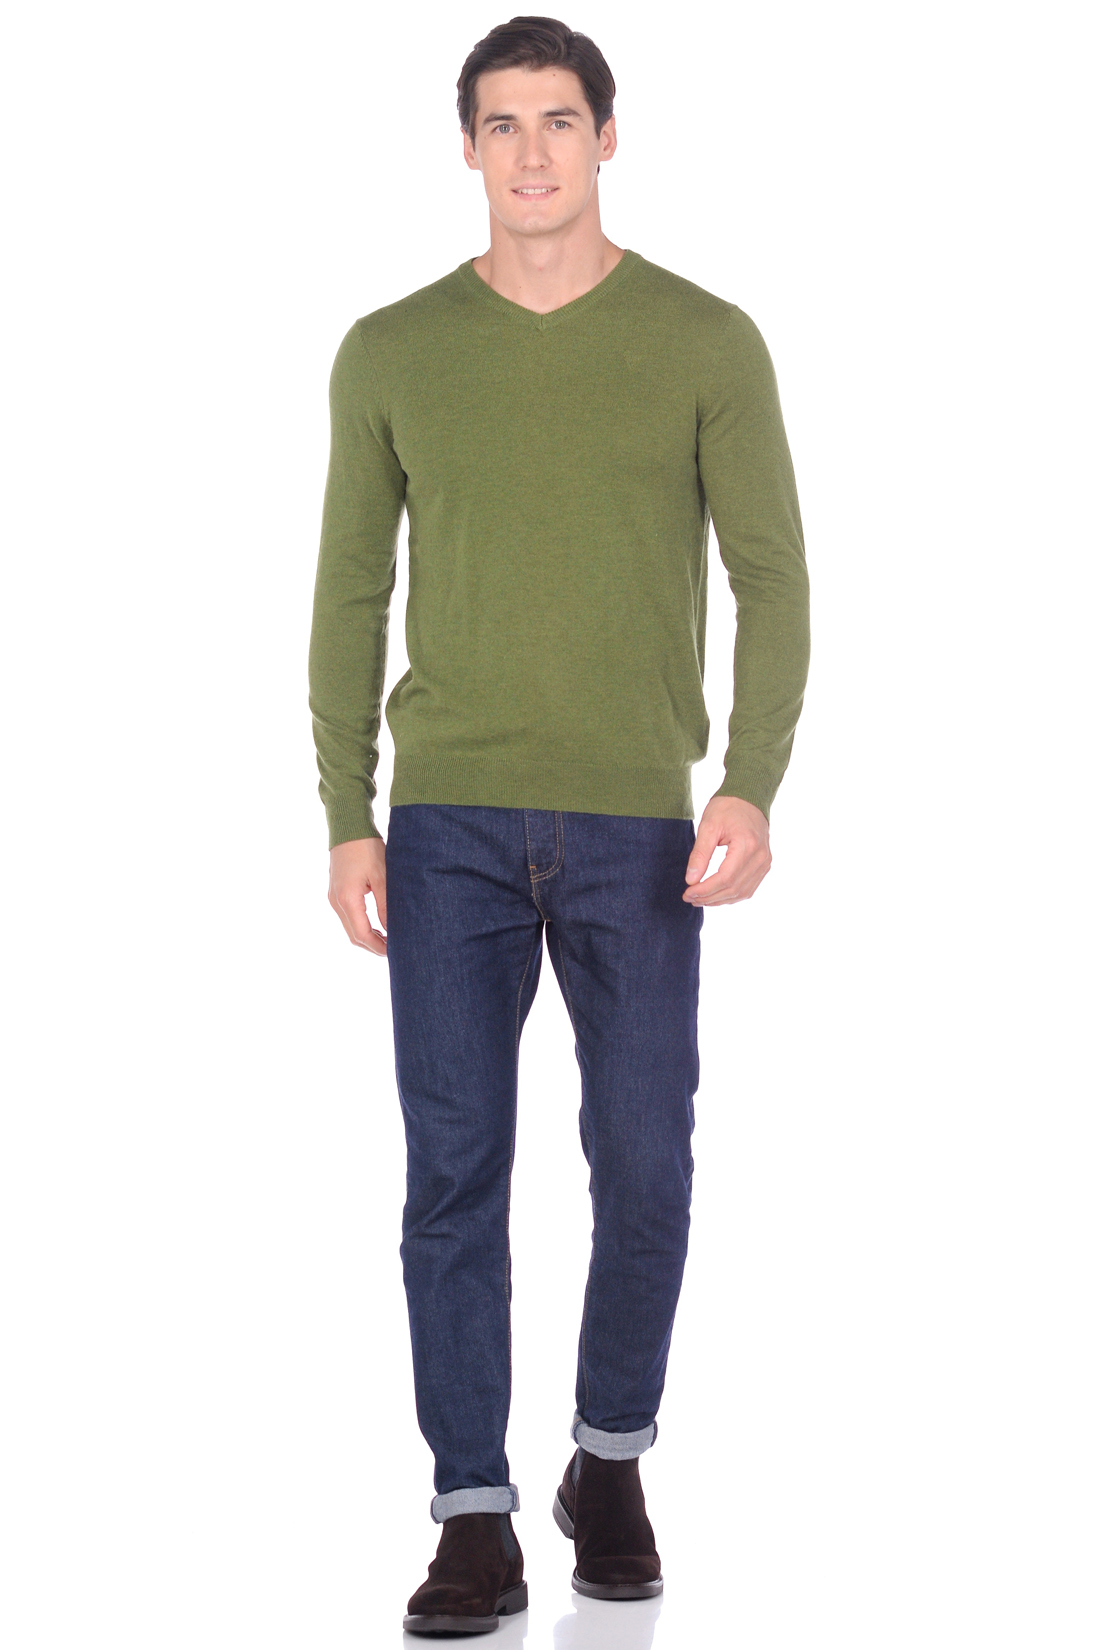 Базовый пуловер с шерстью (арт. baon B639702), размер XXL, цвет vine melange#зеленый Базовый пуловер с шерстью (арт. baon B639702) - фото 3